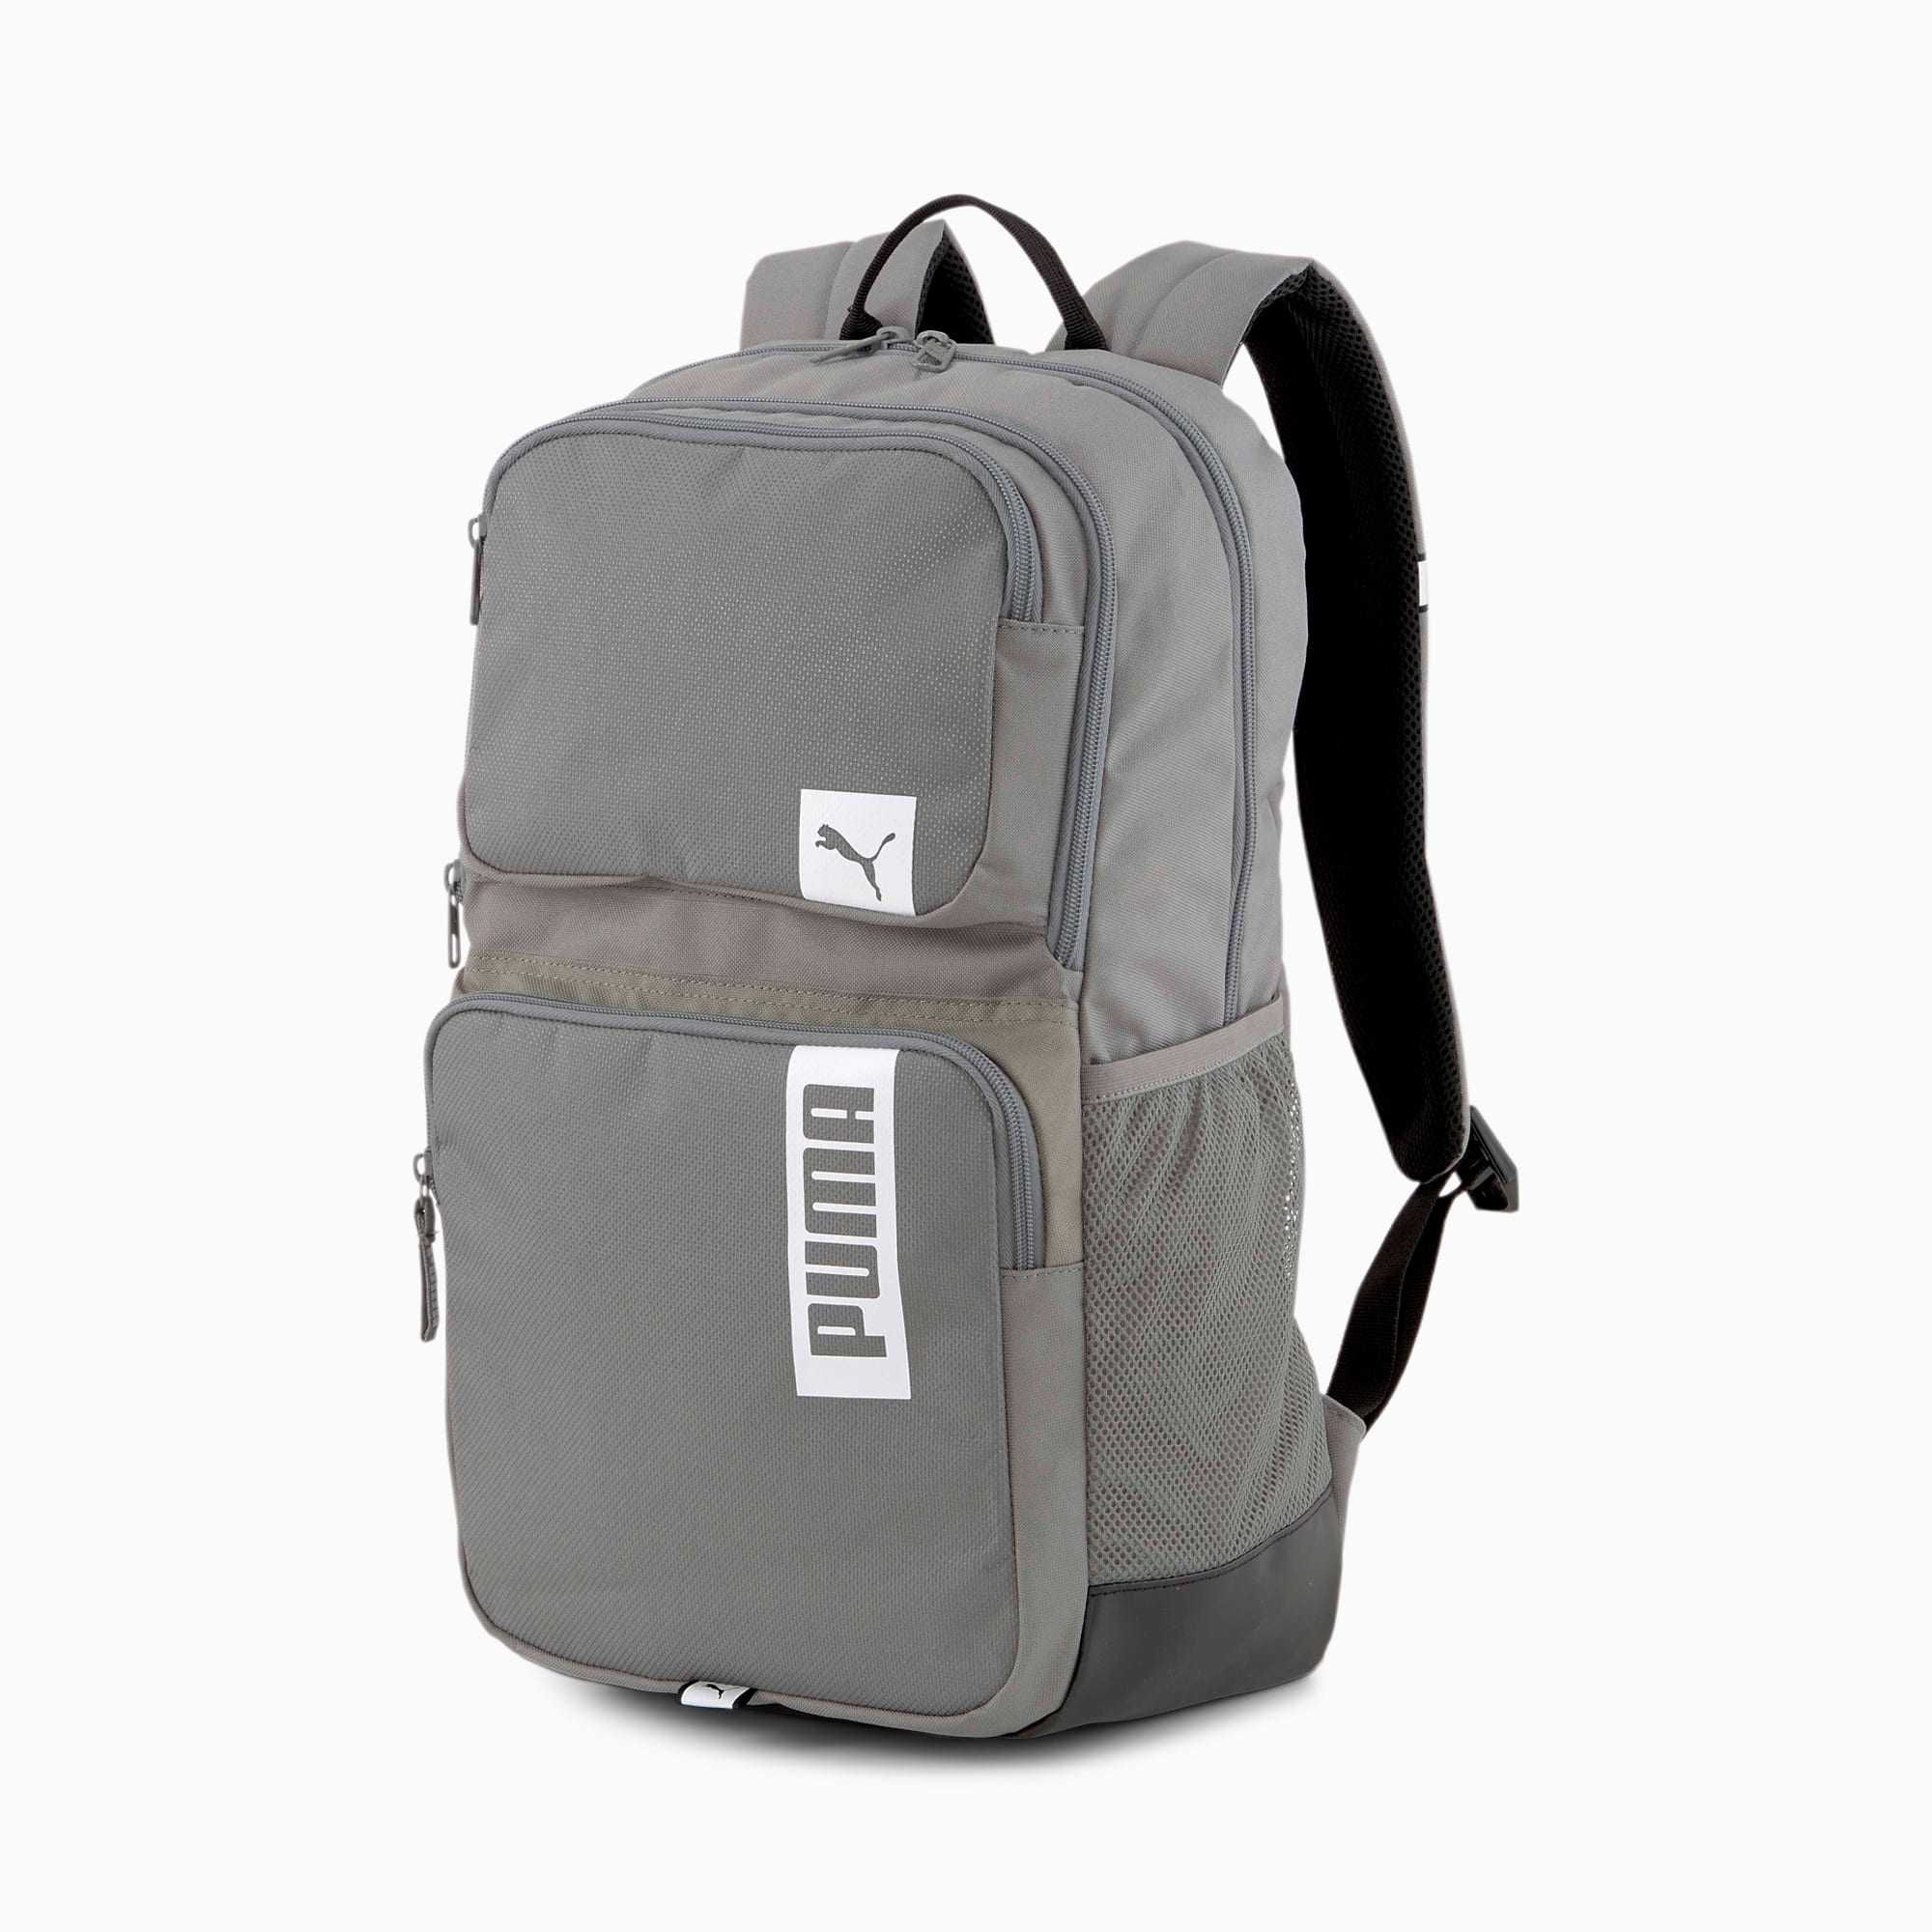 PUMA Deck Backpack II | PUMA US